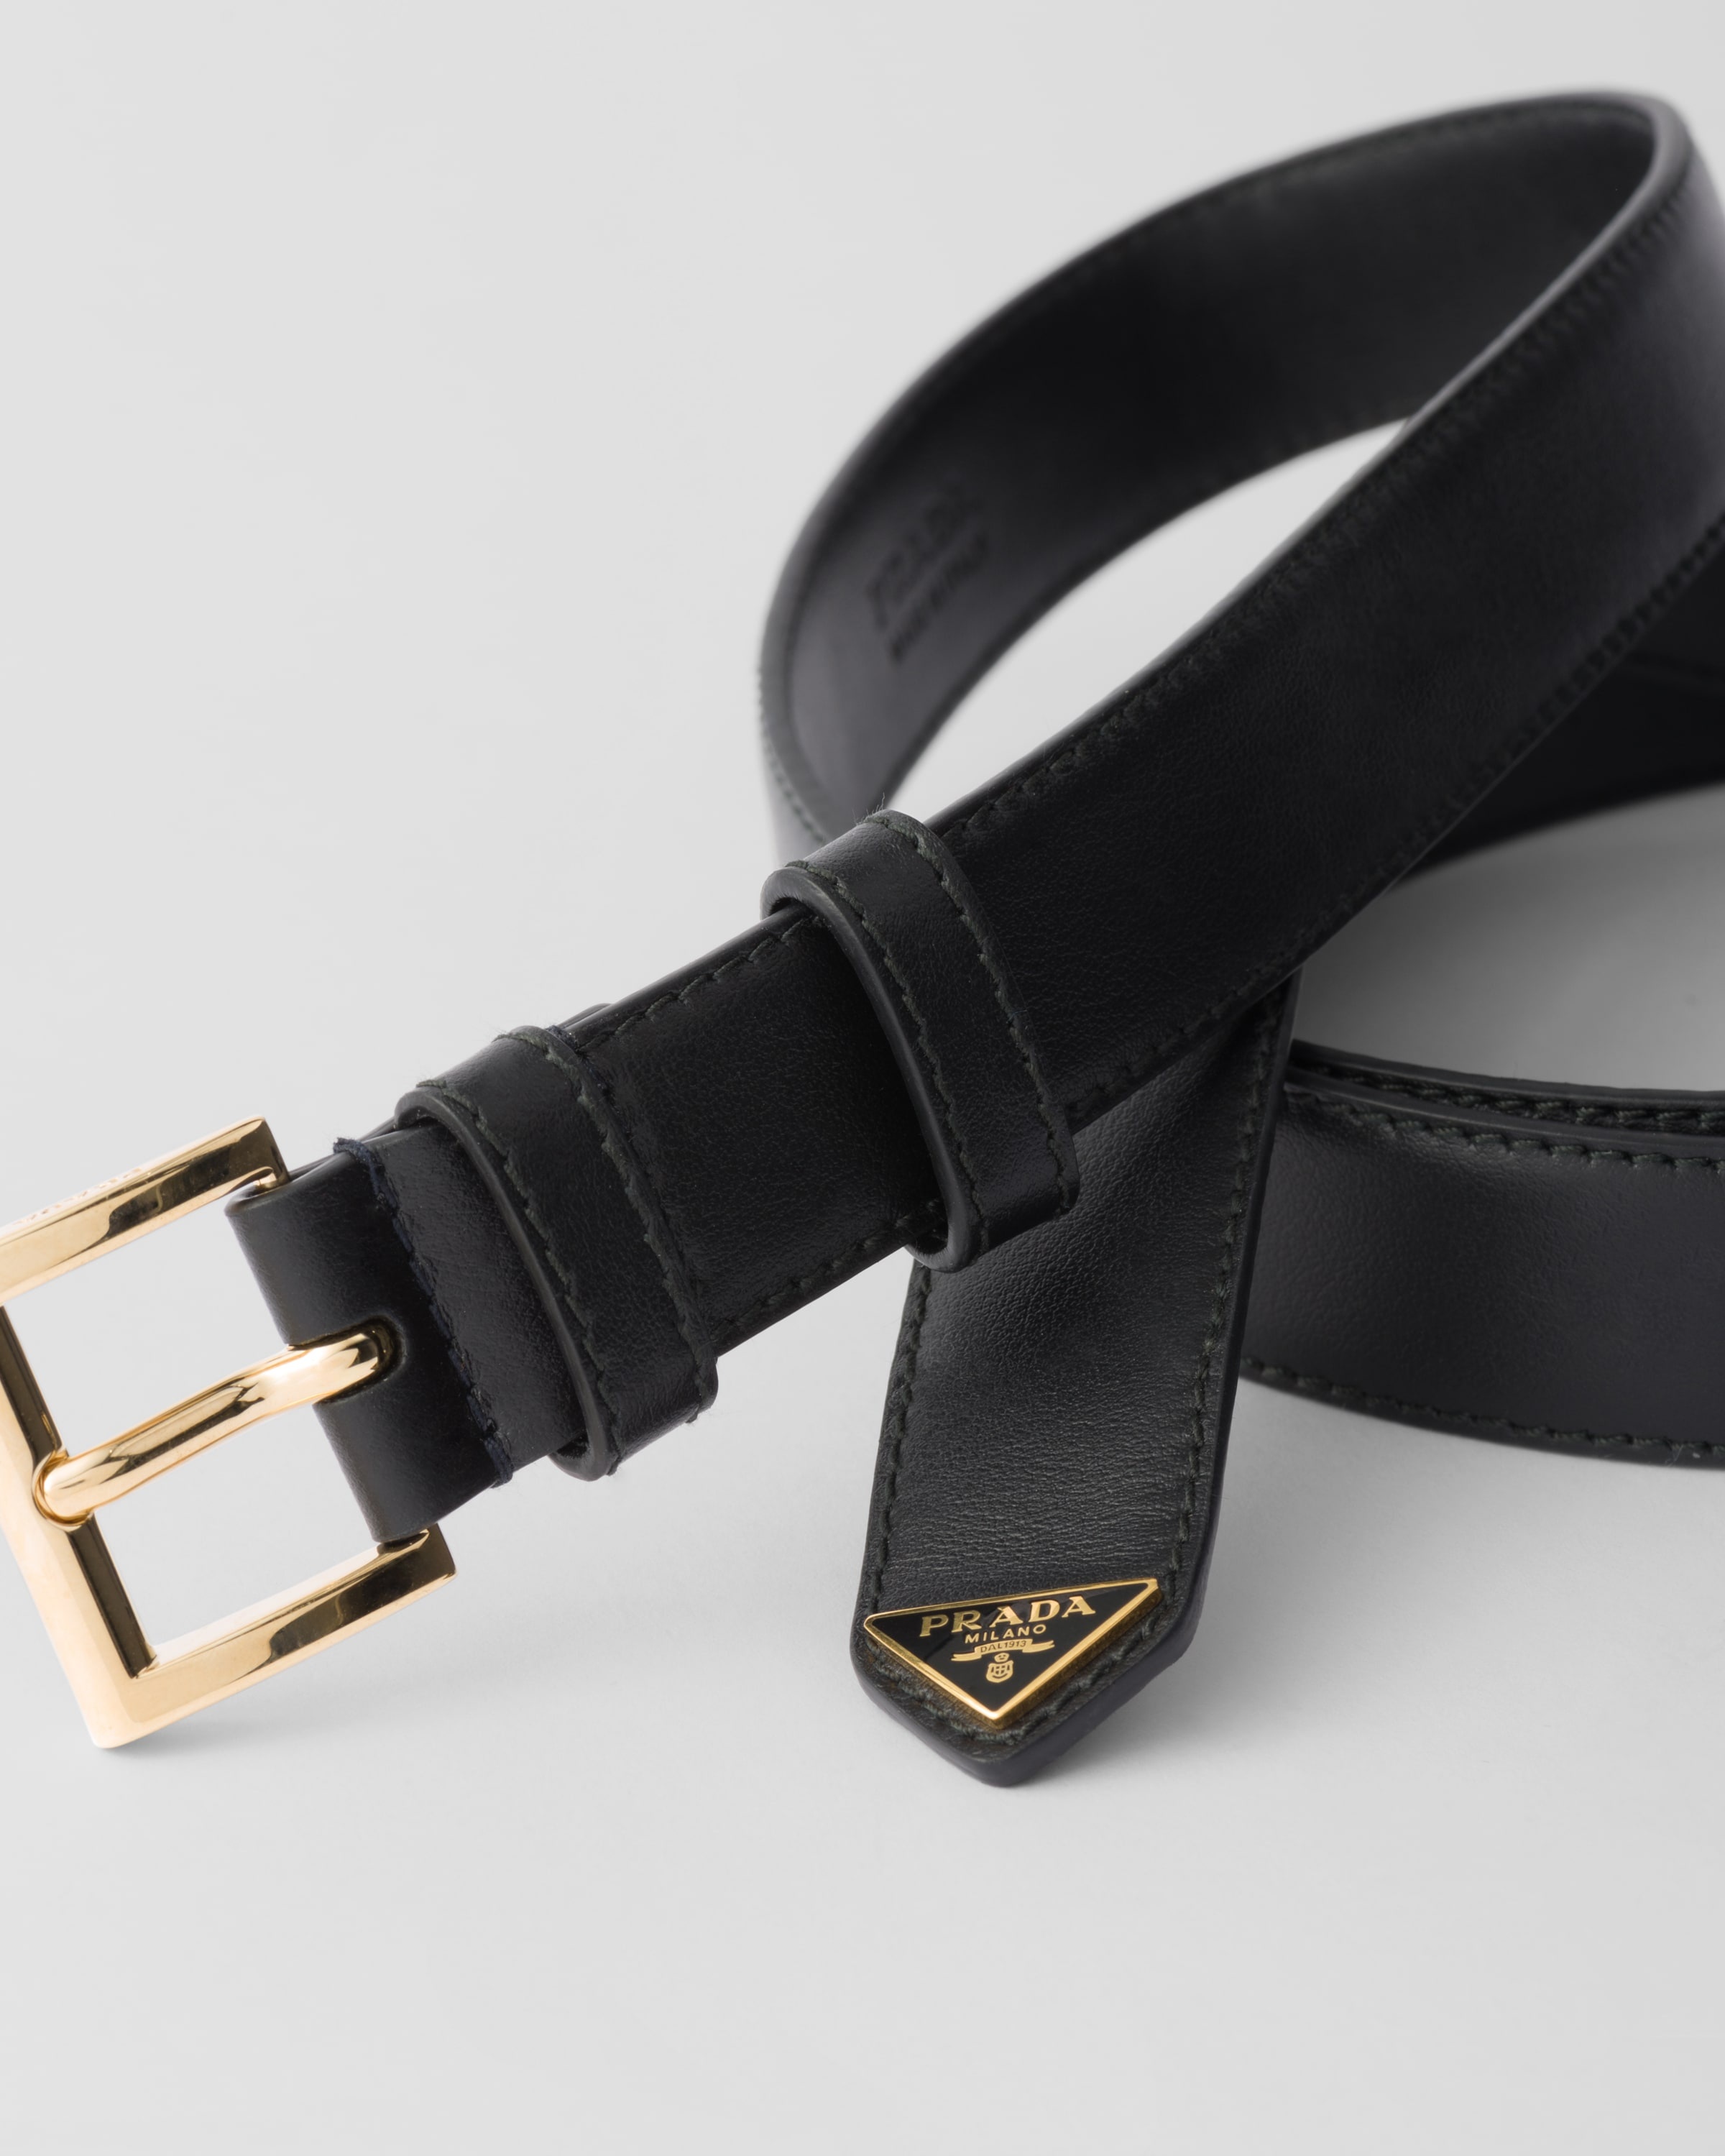 Leather belt - 3